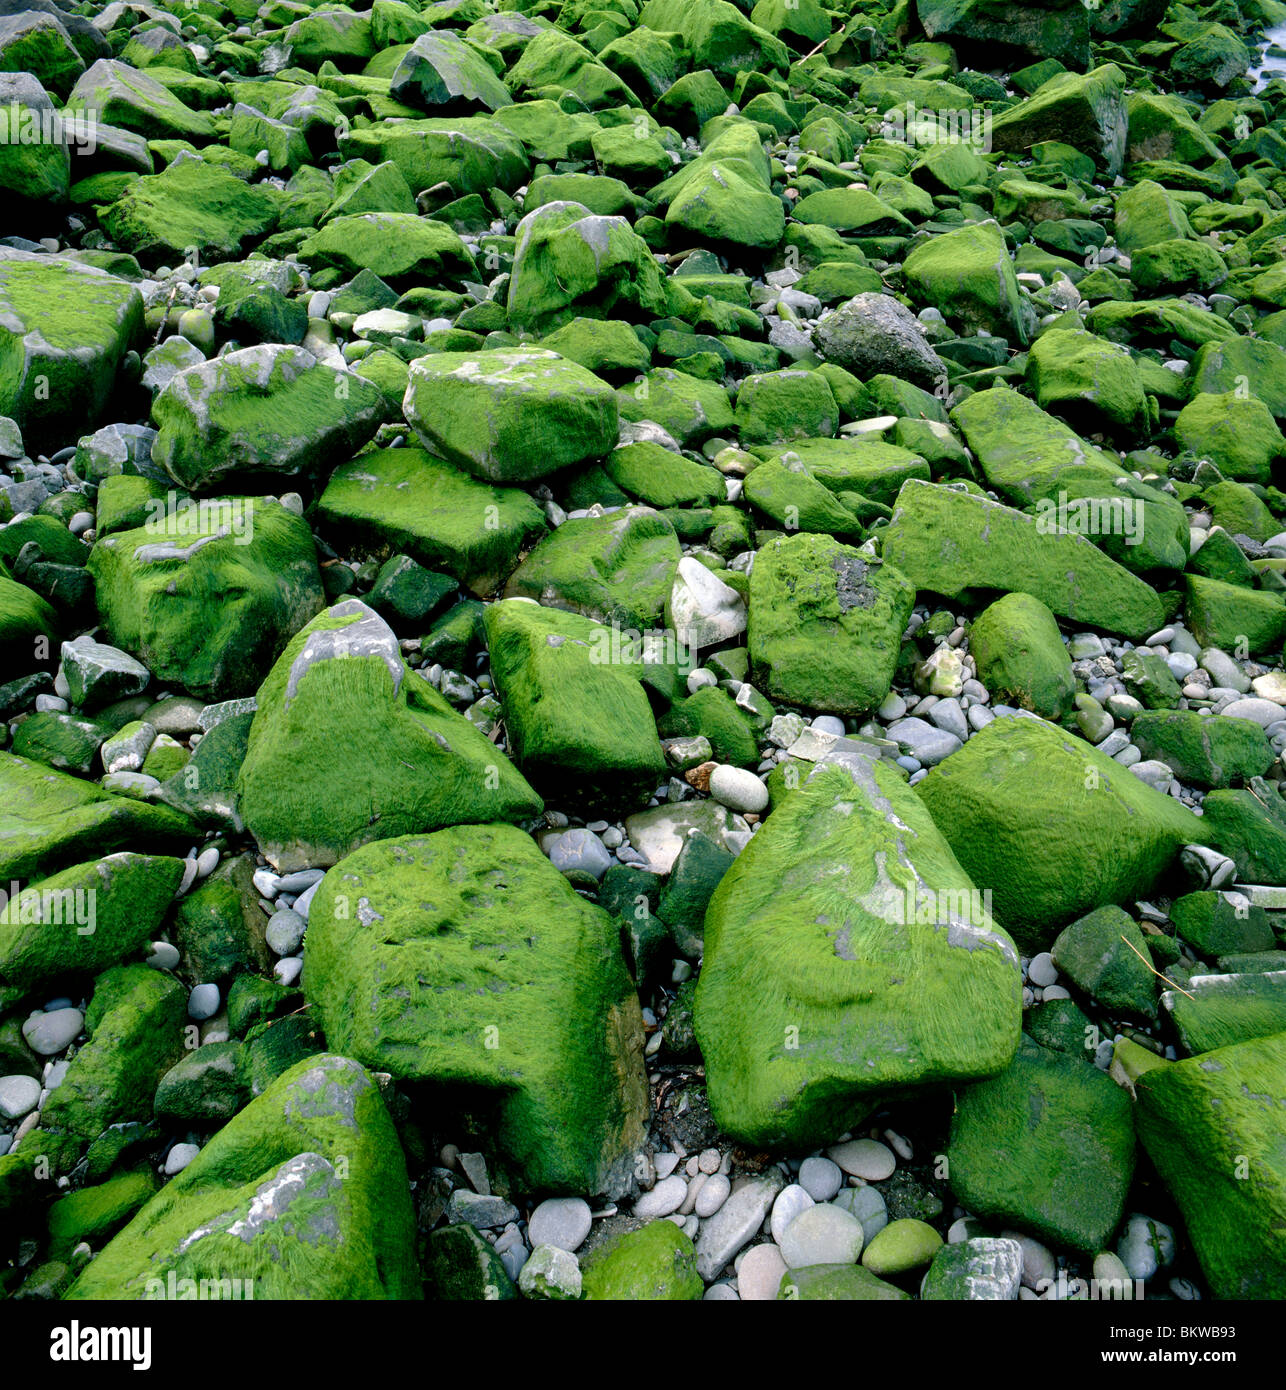 River rocks covered with green moss & lichen, Quillayute River Delta, Pacific Ocean, Olympic Penninsula, La Push, Washington USA Stock Photo